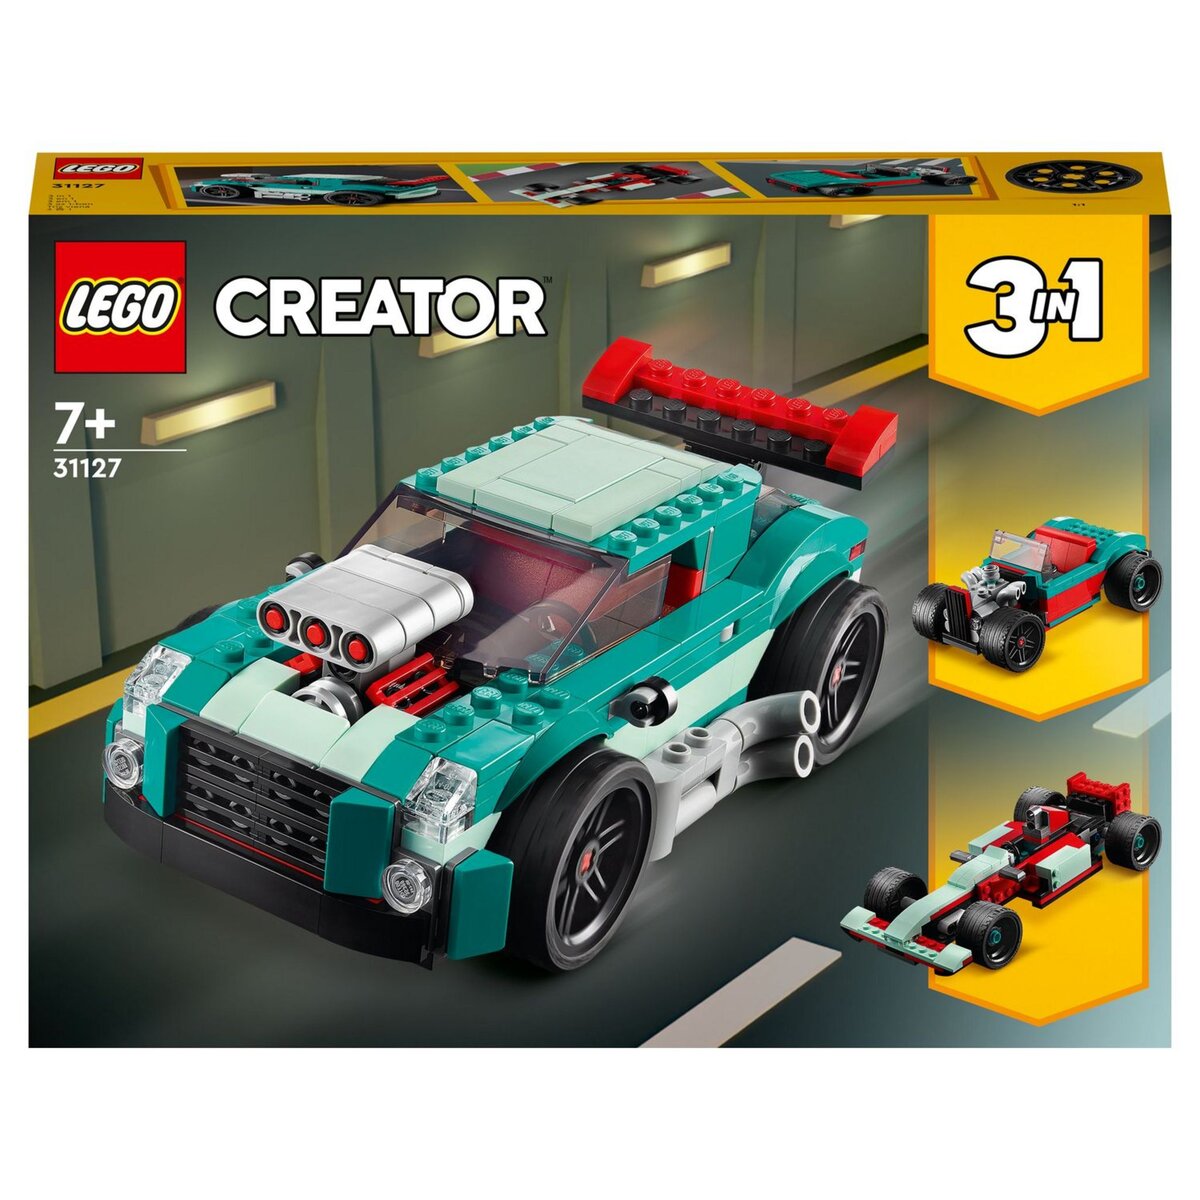 Lego Creator pas cher